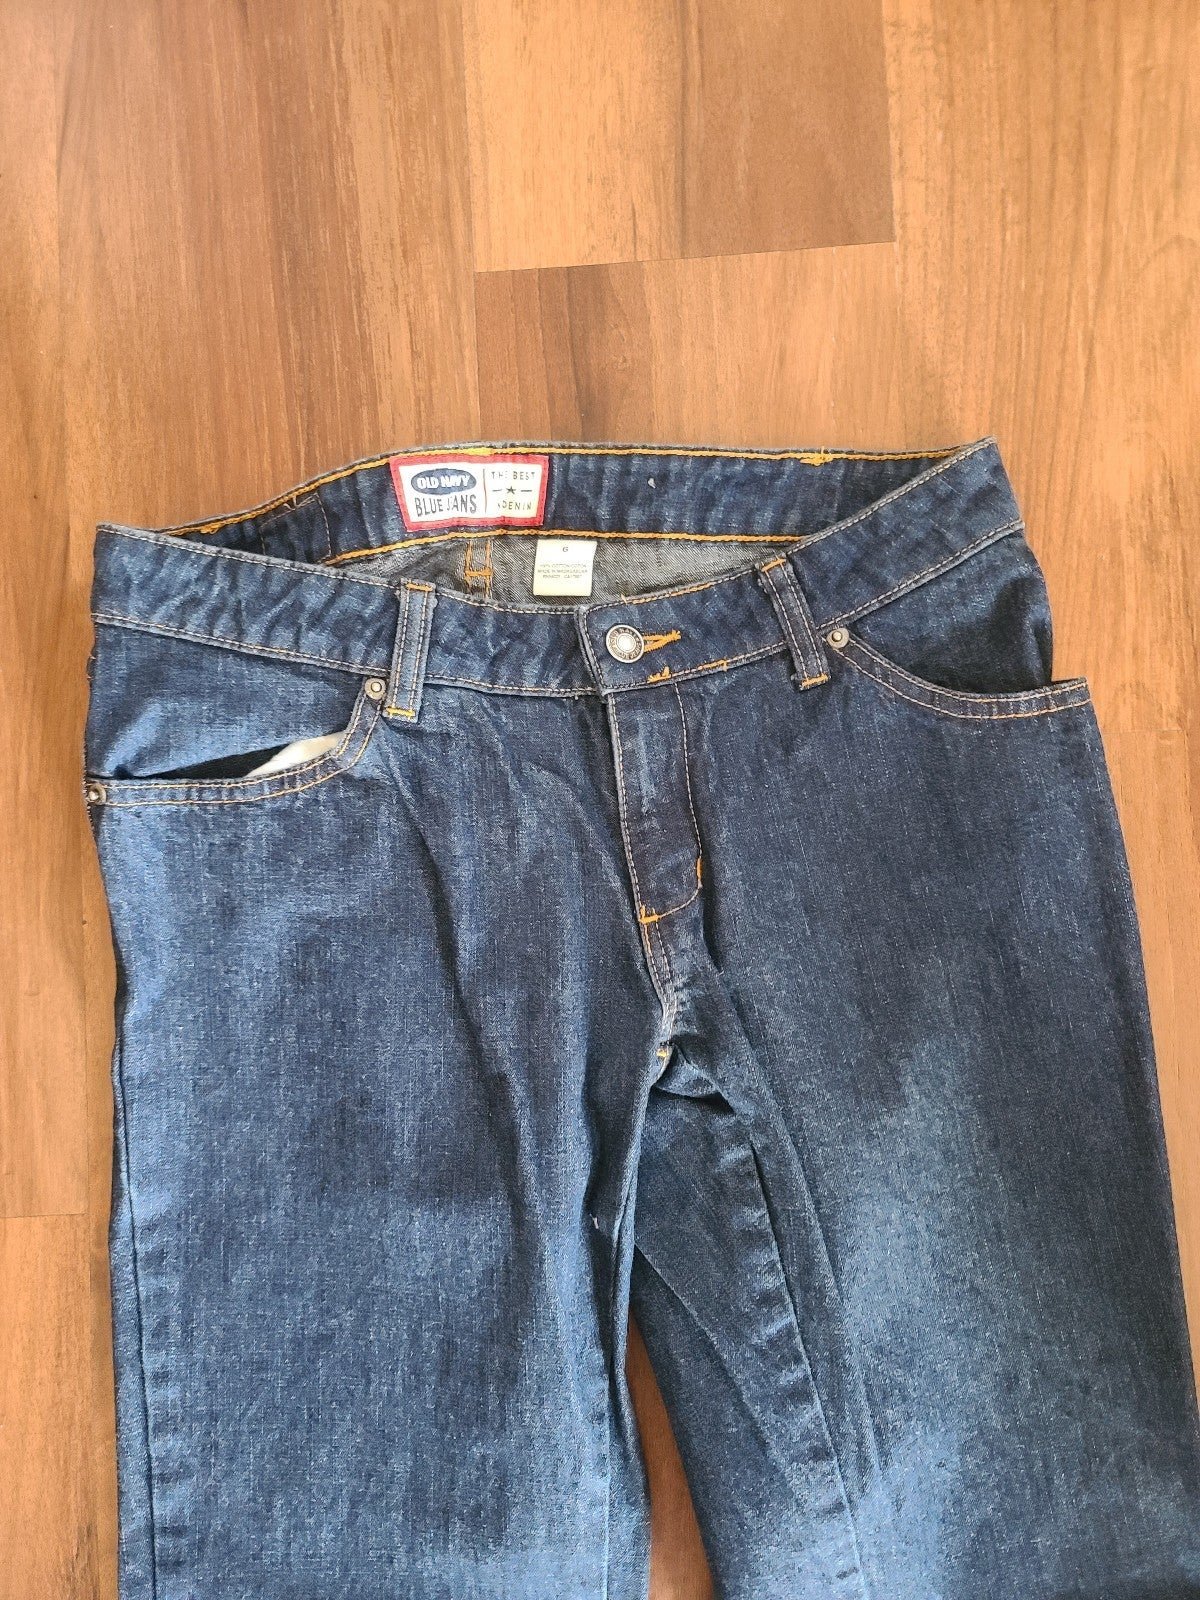 big discount Old navy jeans gJl0qak47 Hot Sale